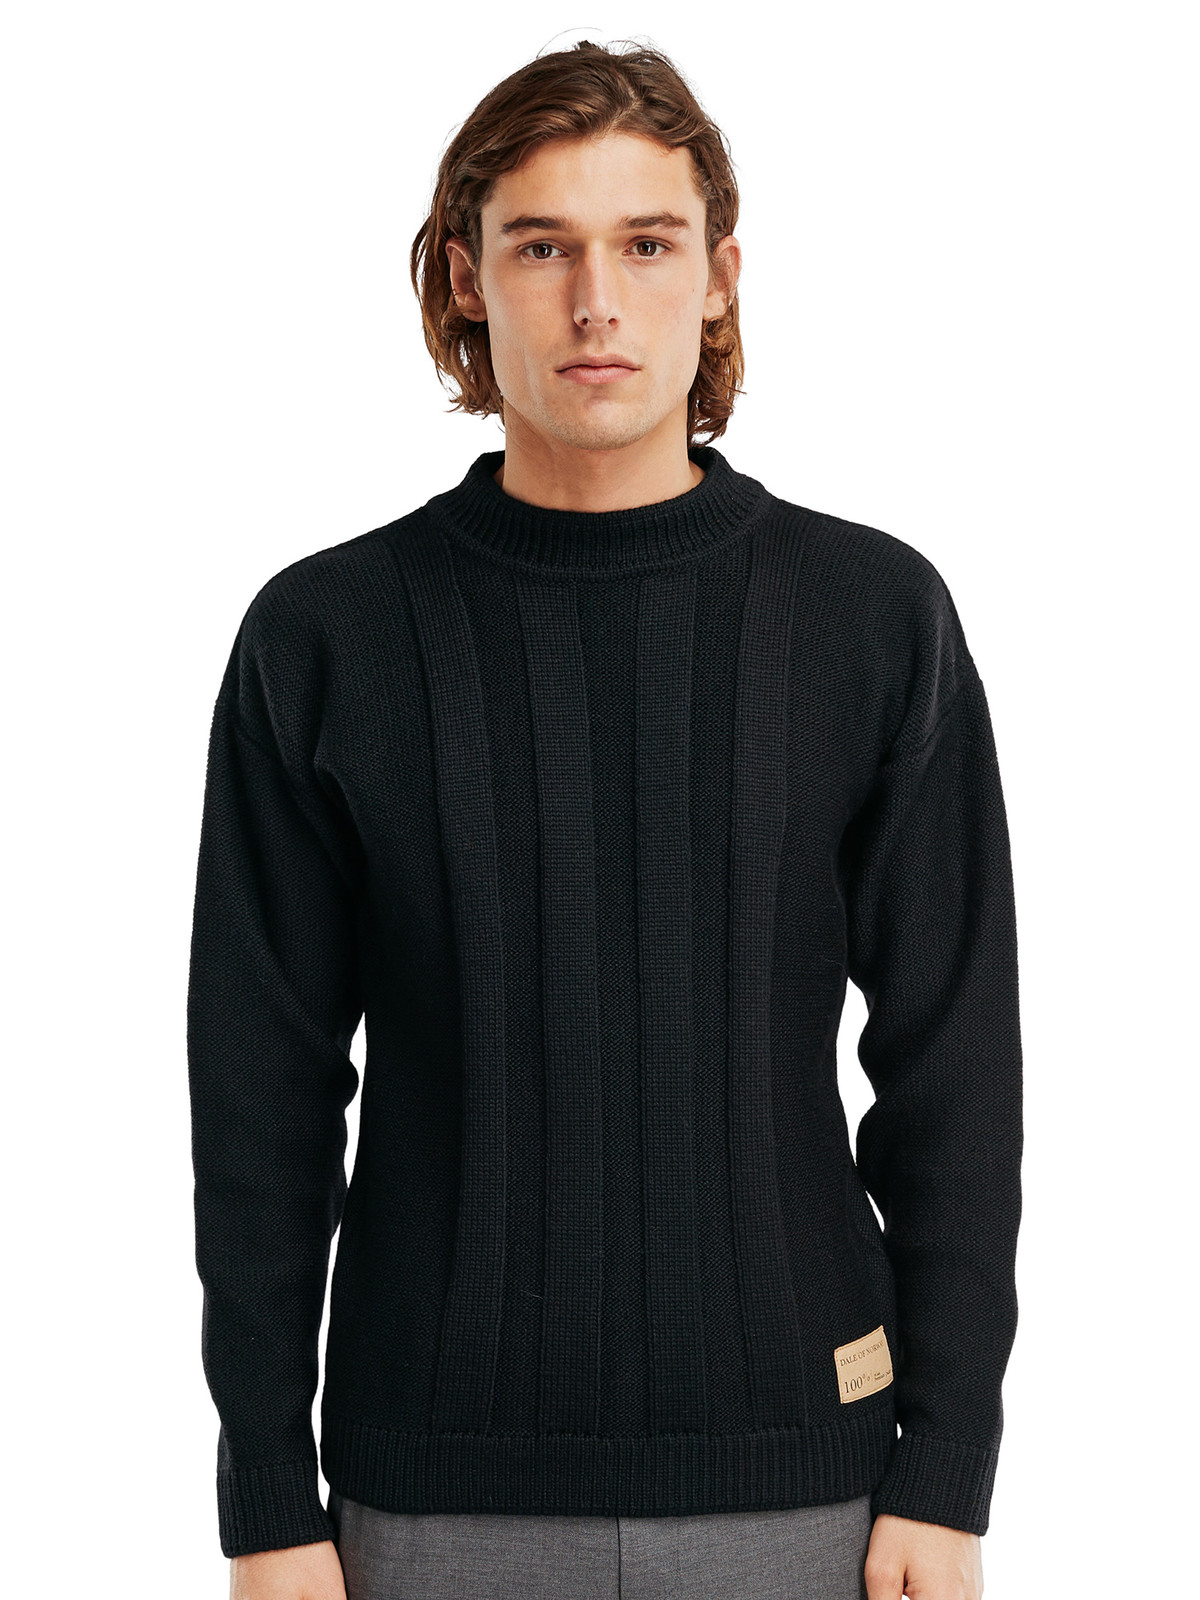 Dale of Norway Kvaloy Men's Sweater, Black, 95451-F00